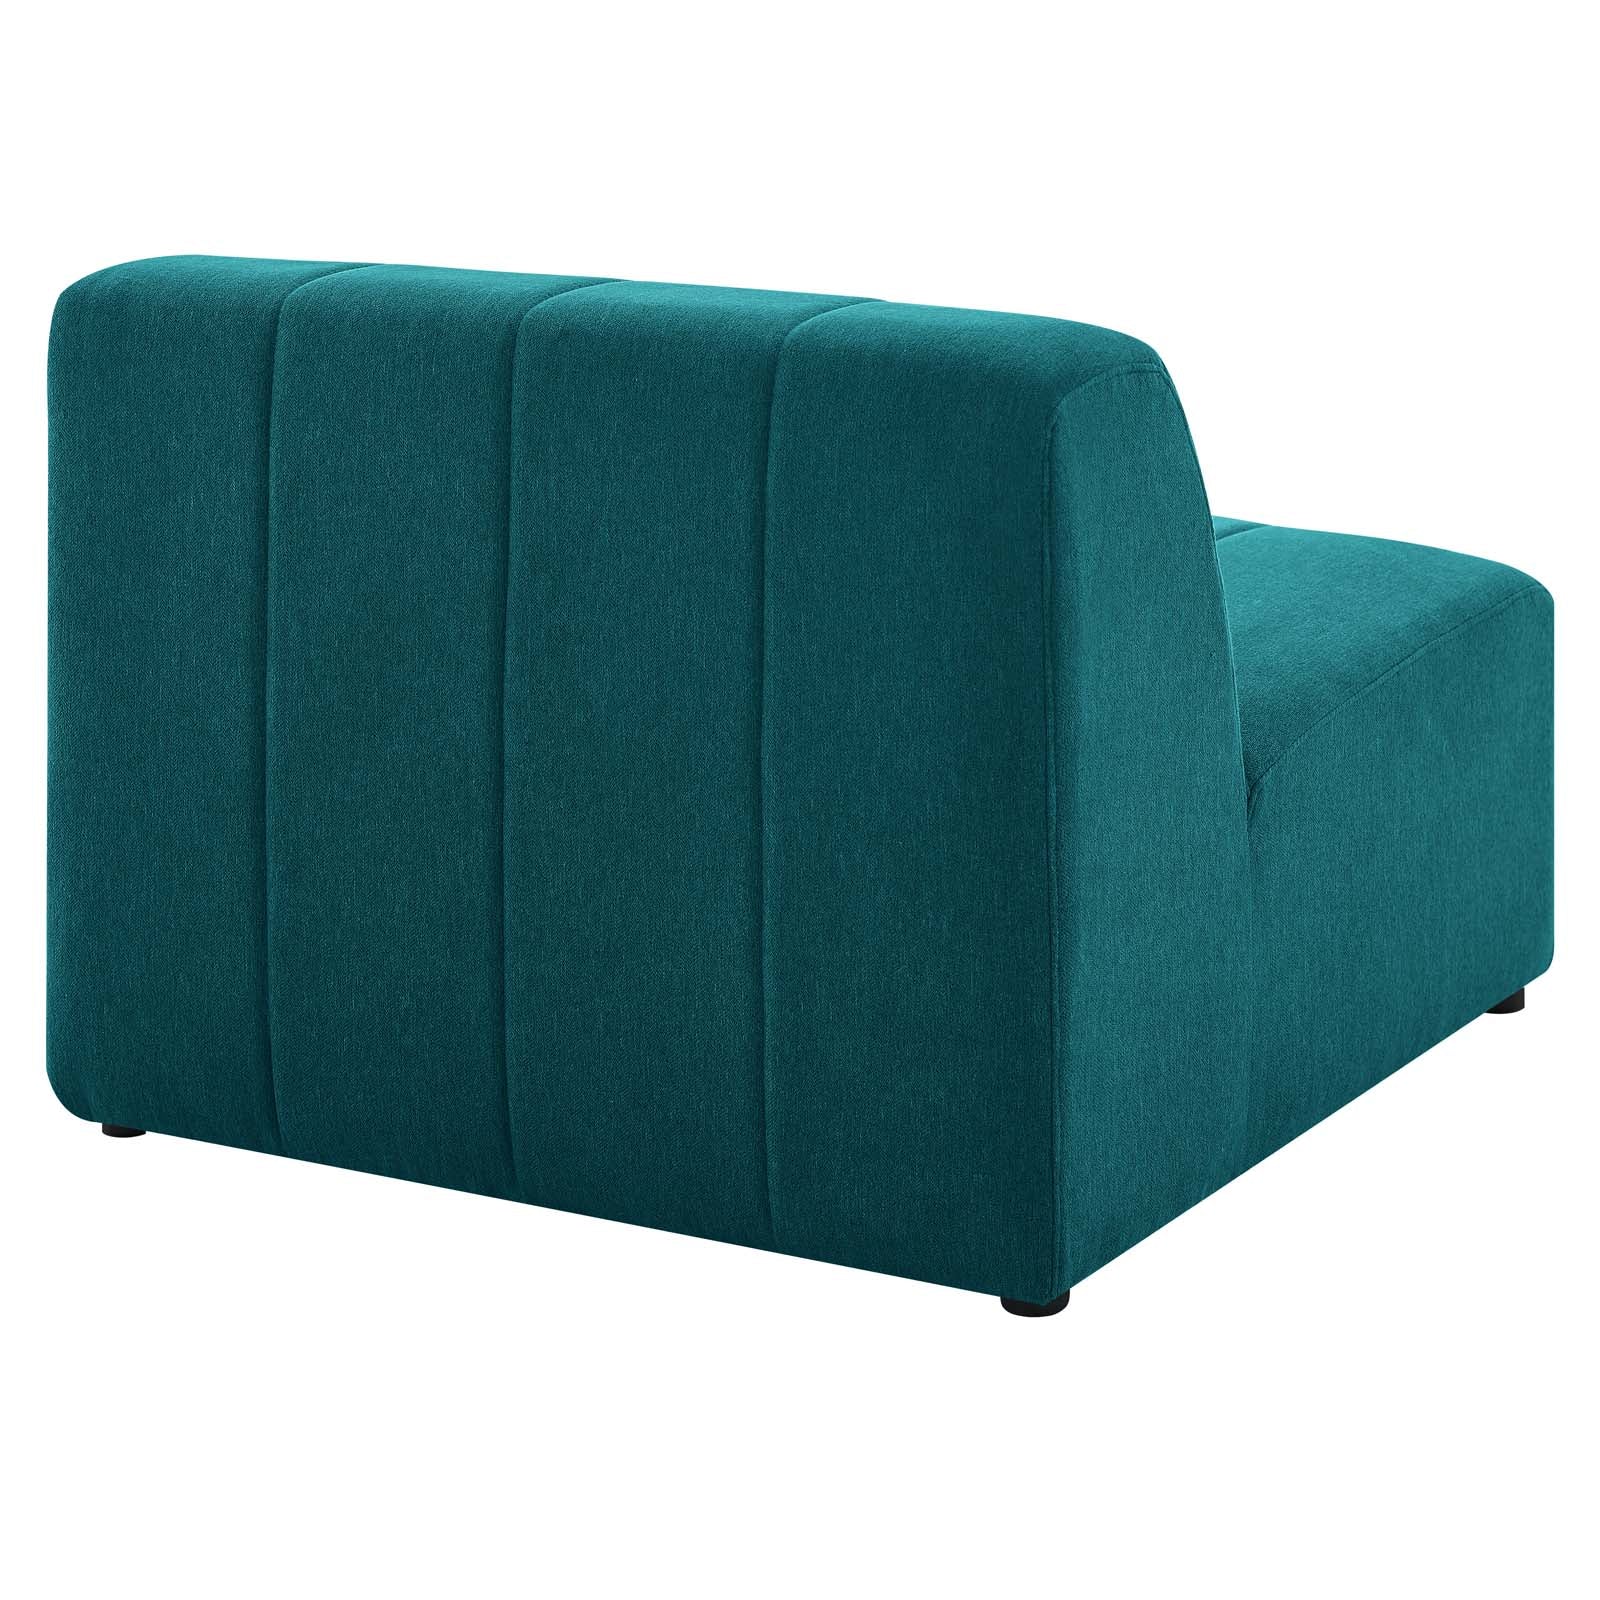 Bartlett Upholstered Fabric Armless Chair